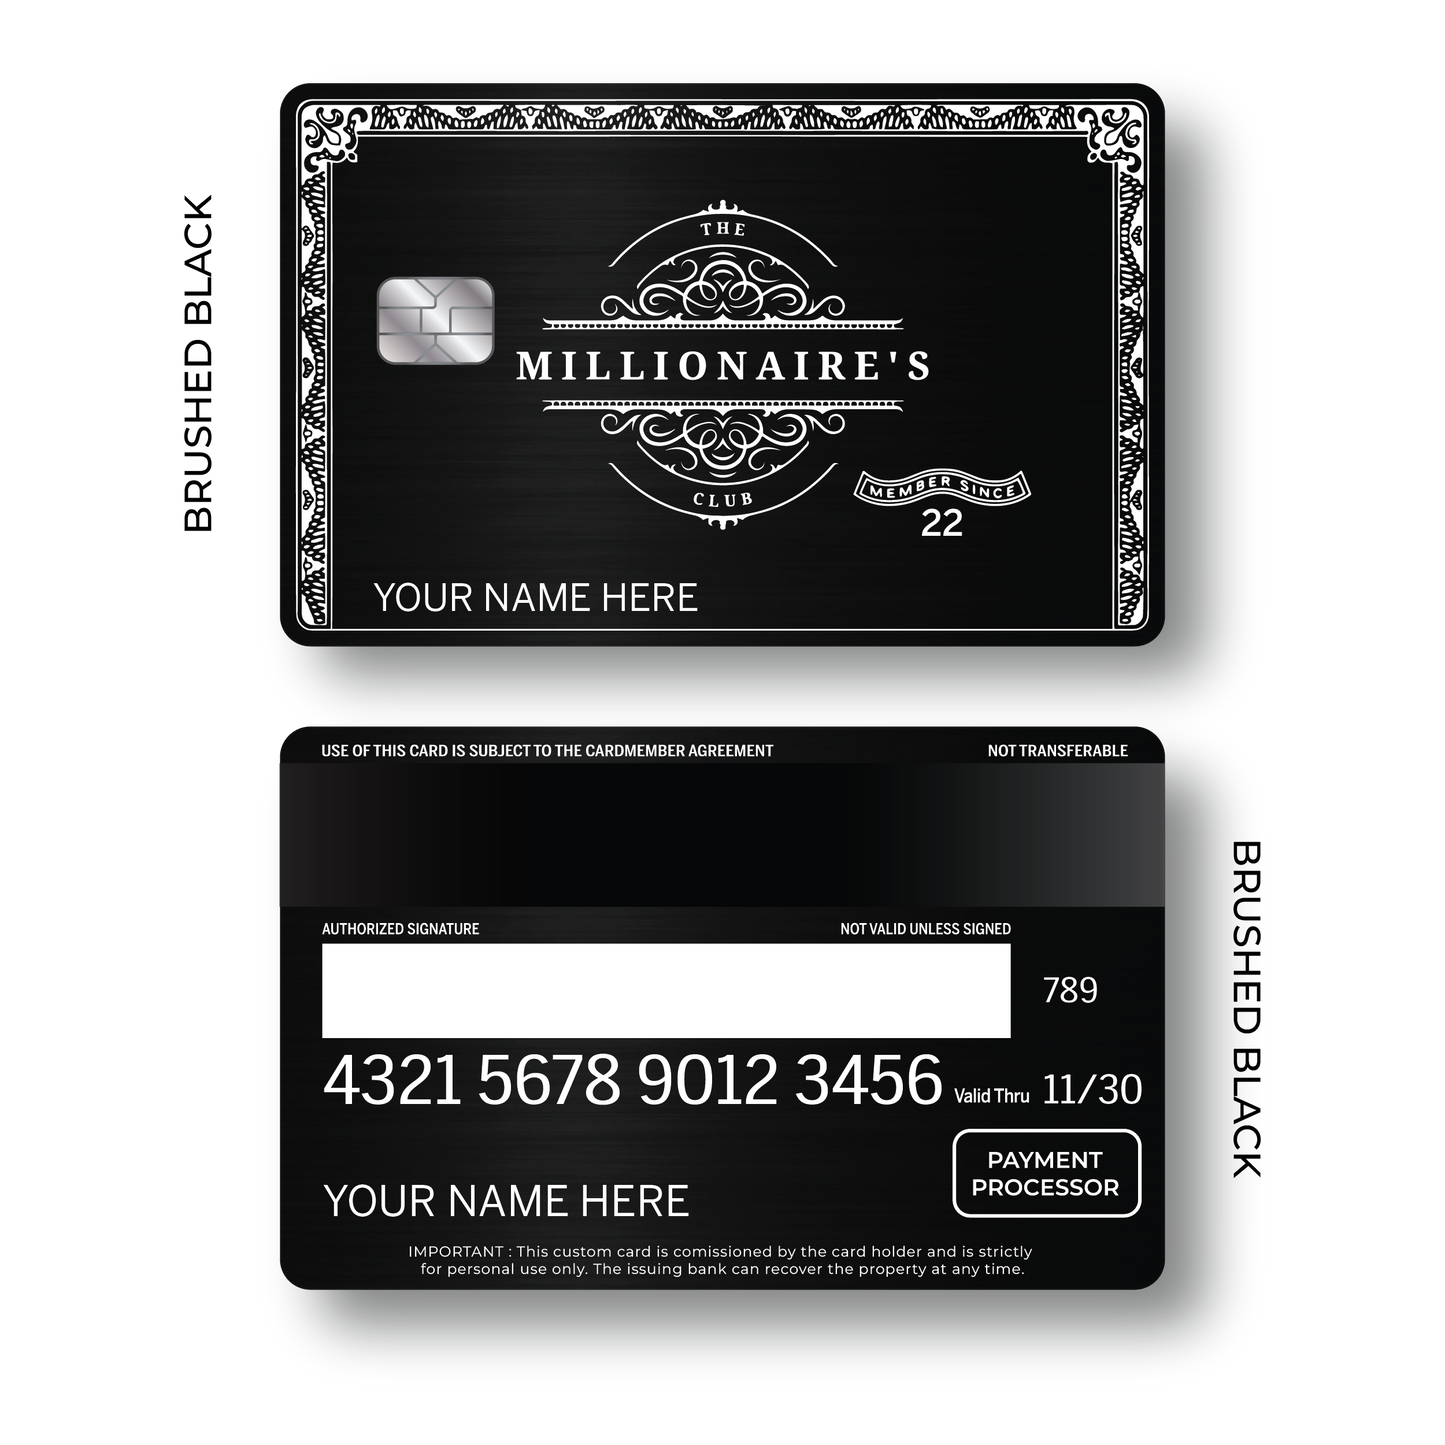 Metal Card Millionaires Club V1